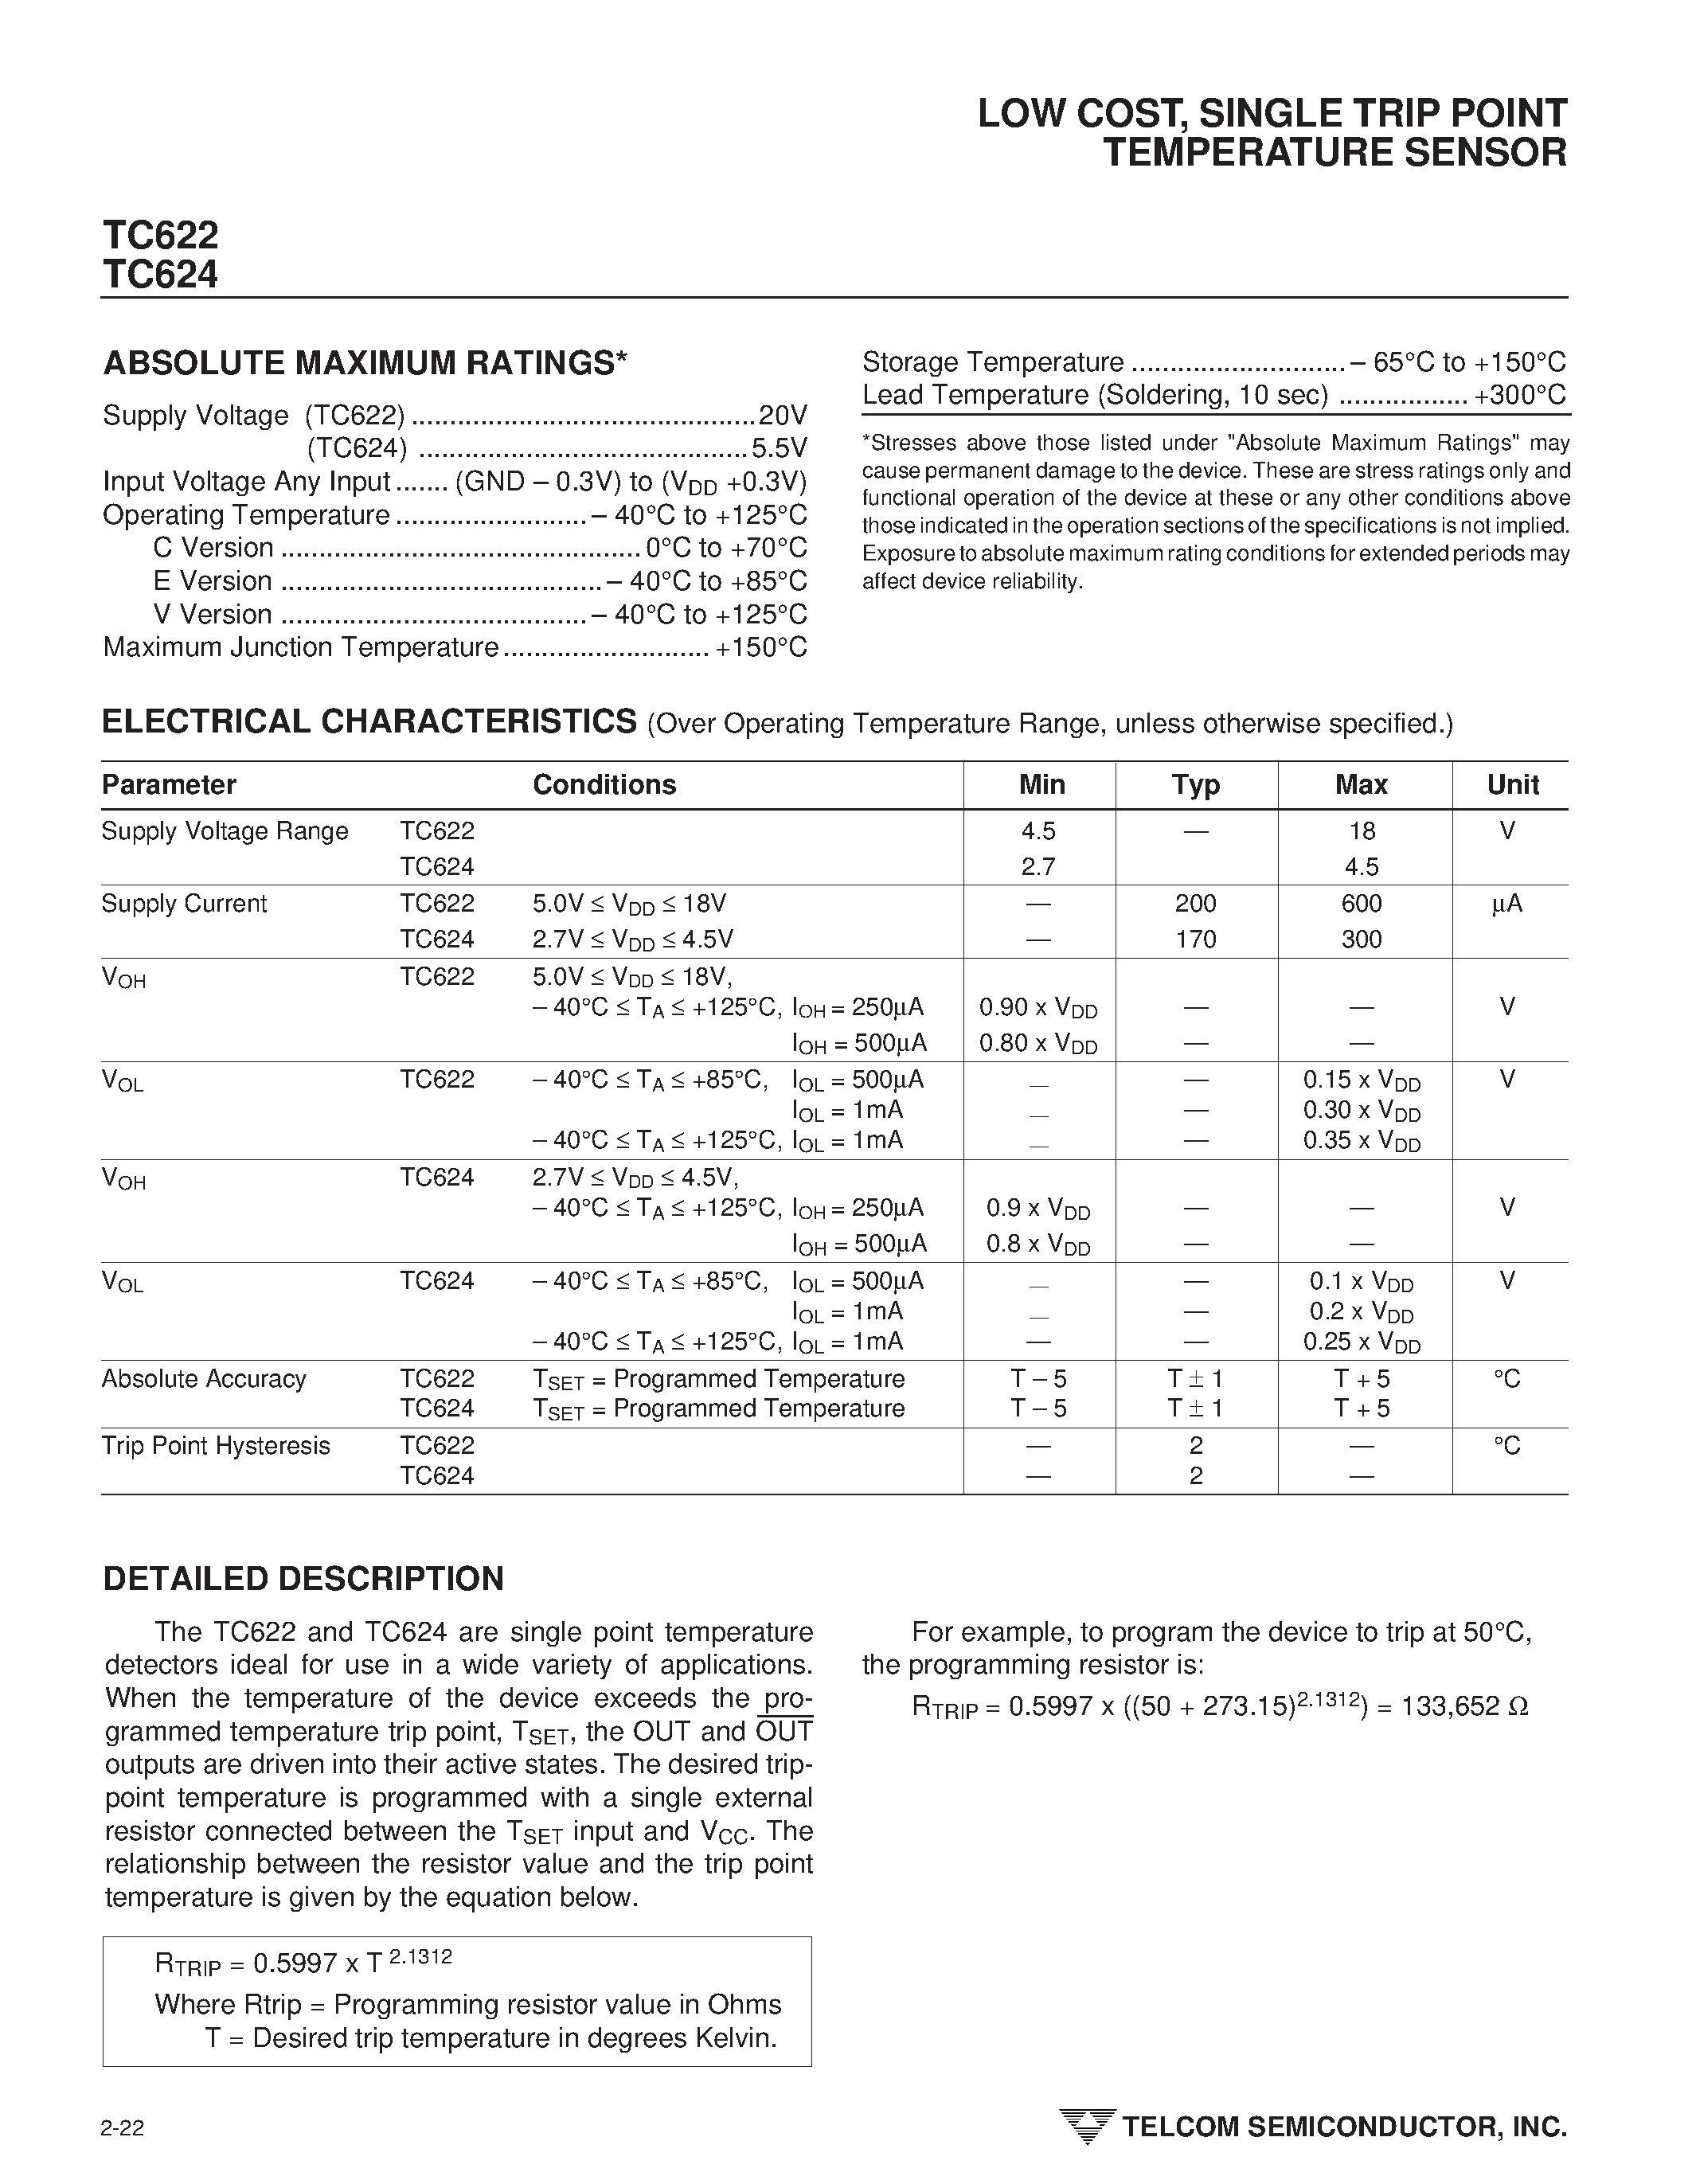 Datasheet TC622 - (TC622 / TC624) LOW COST SINGLE TRIP POINT TEMPERATURE SENSOR page 2